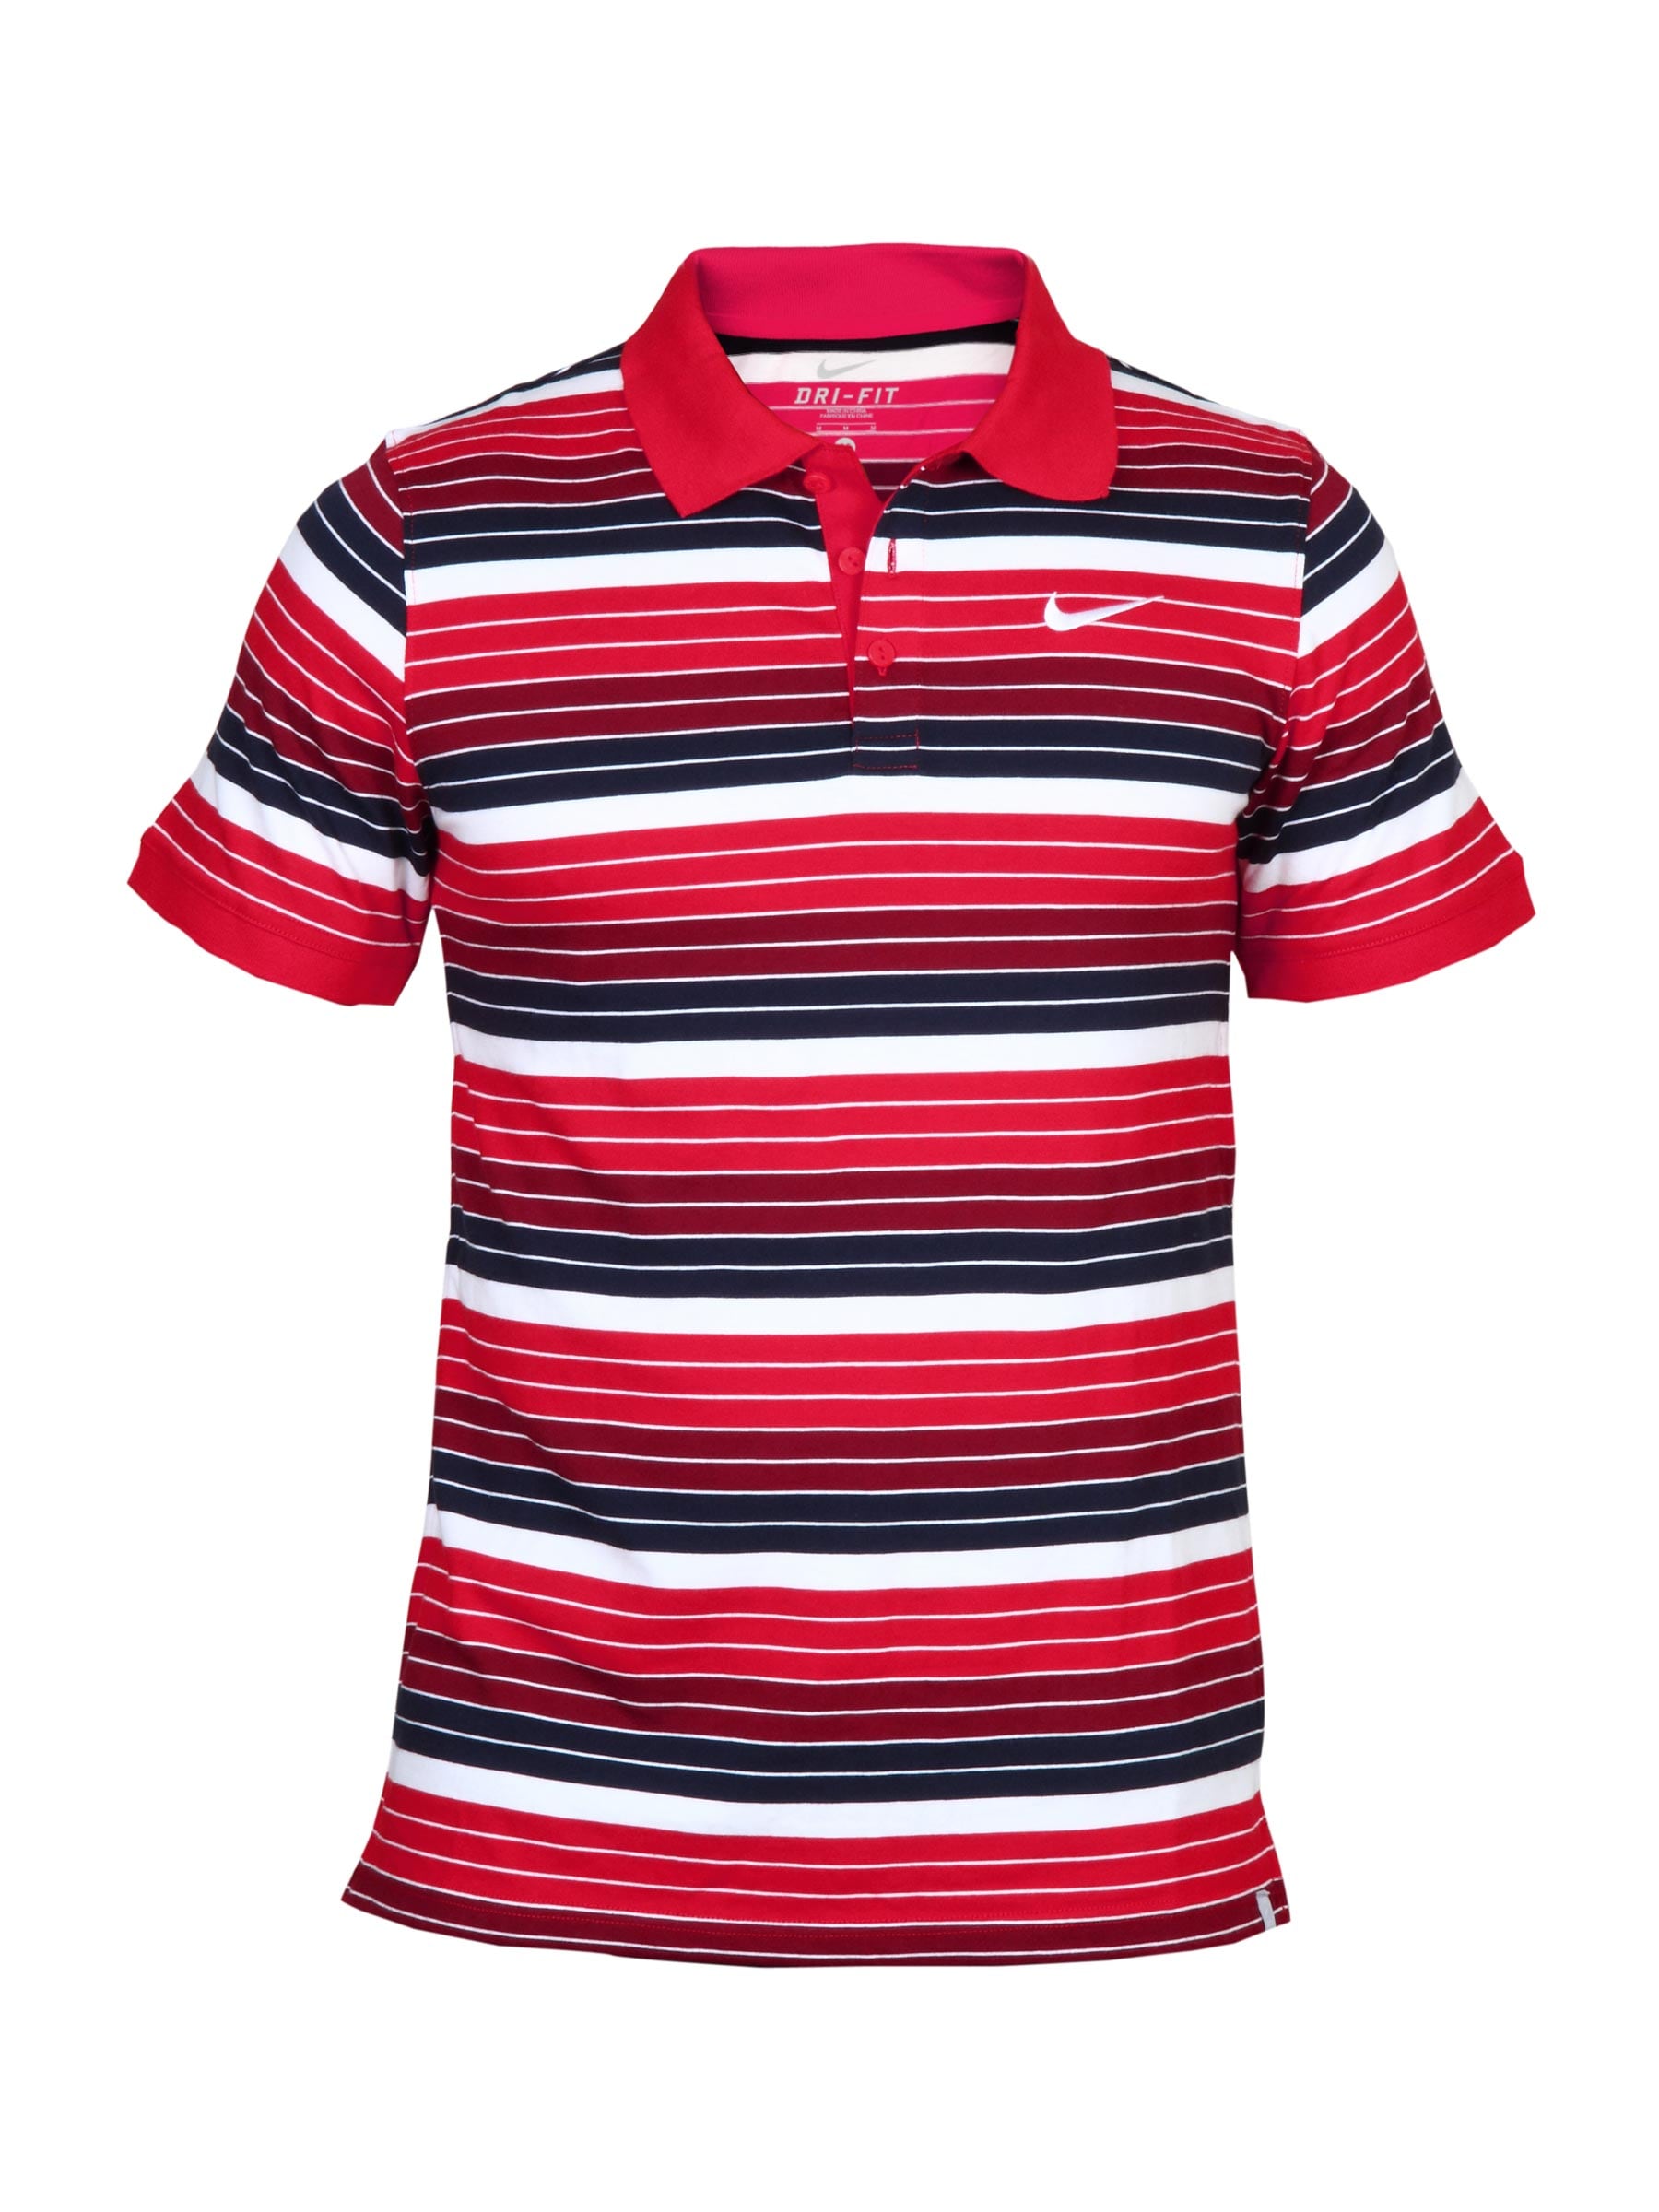 Nike Men's As Colorblock Red T-shirt